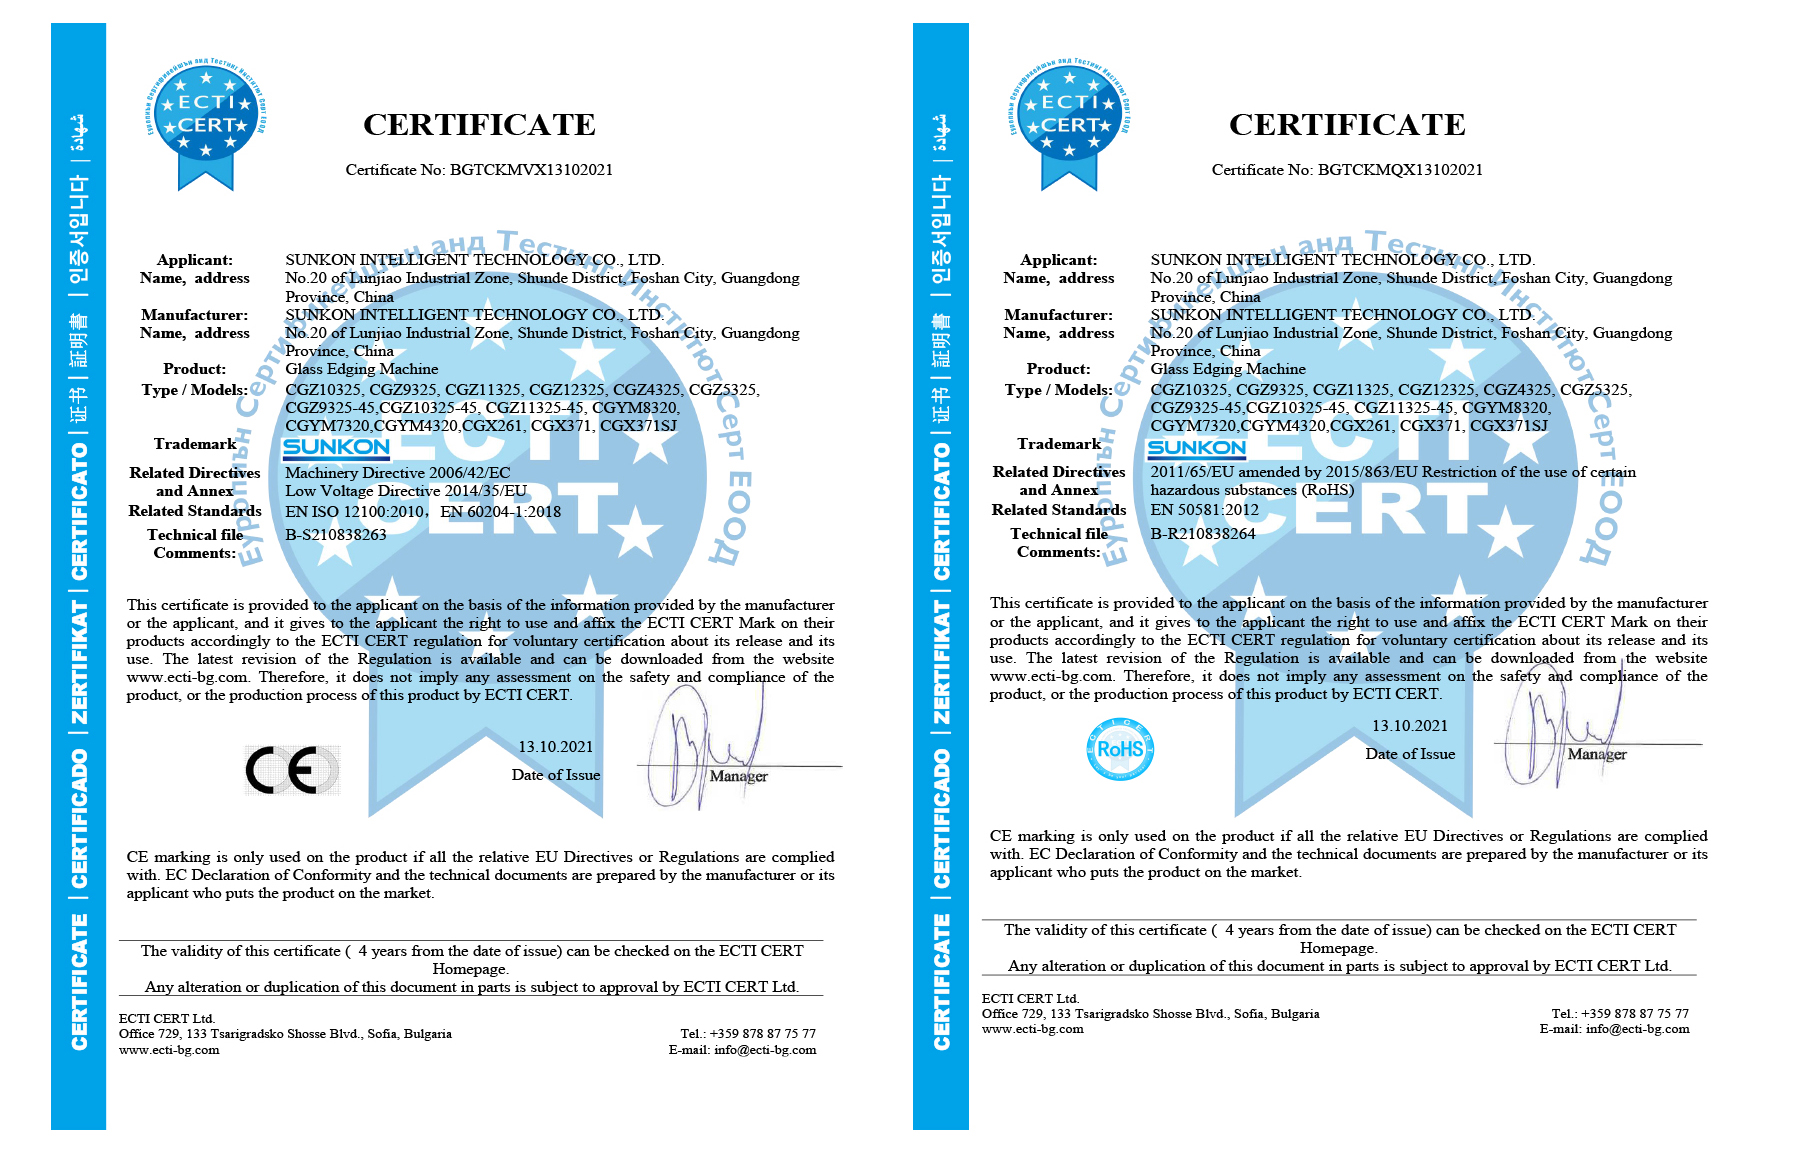 Glass Processing Machinery အတွက် CE လက်မှတ်